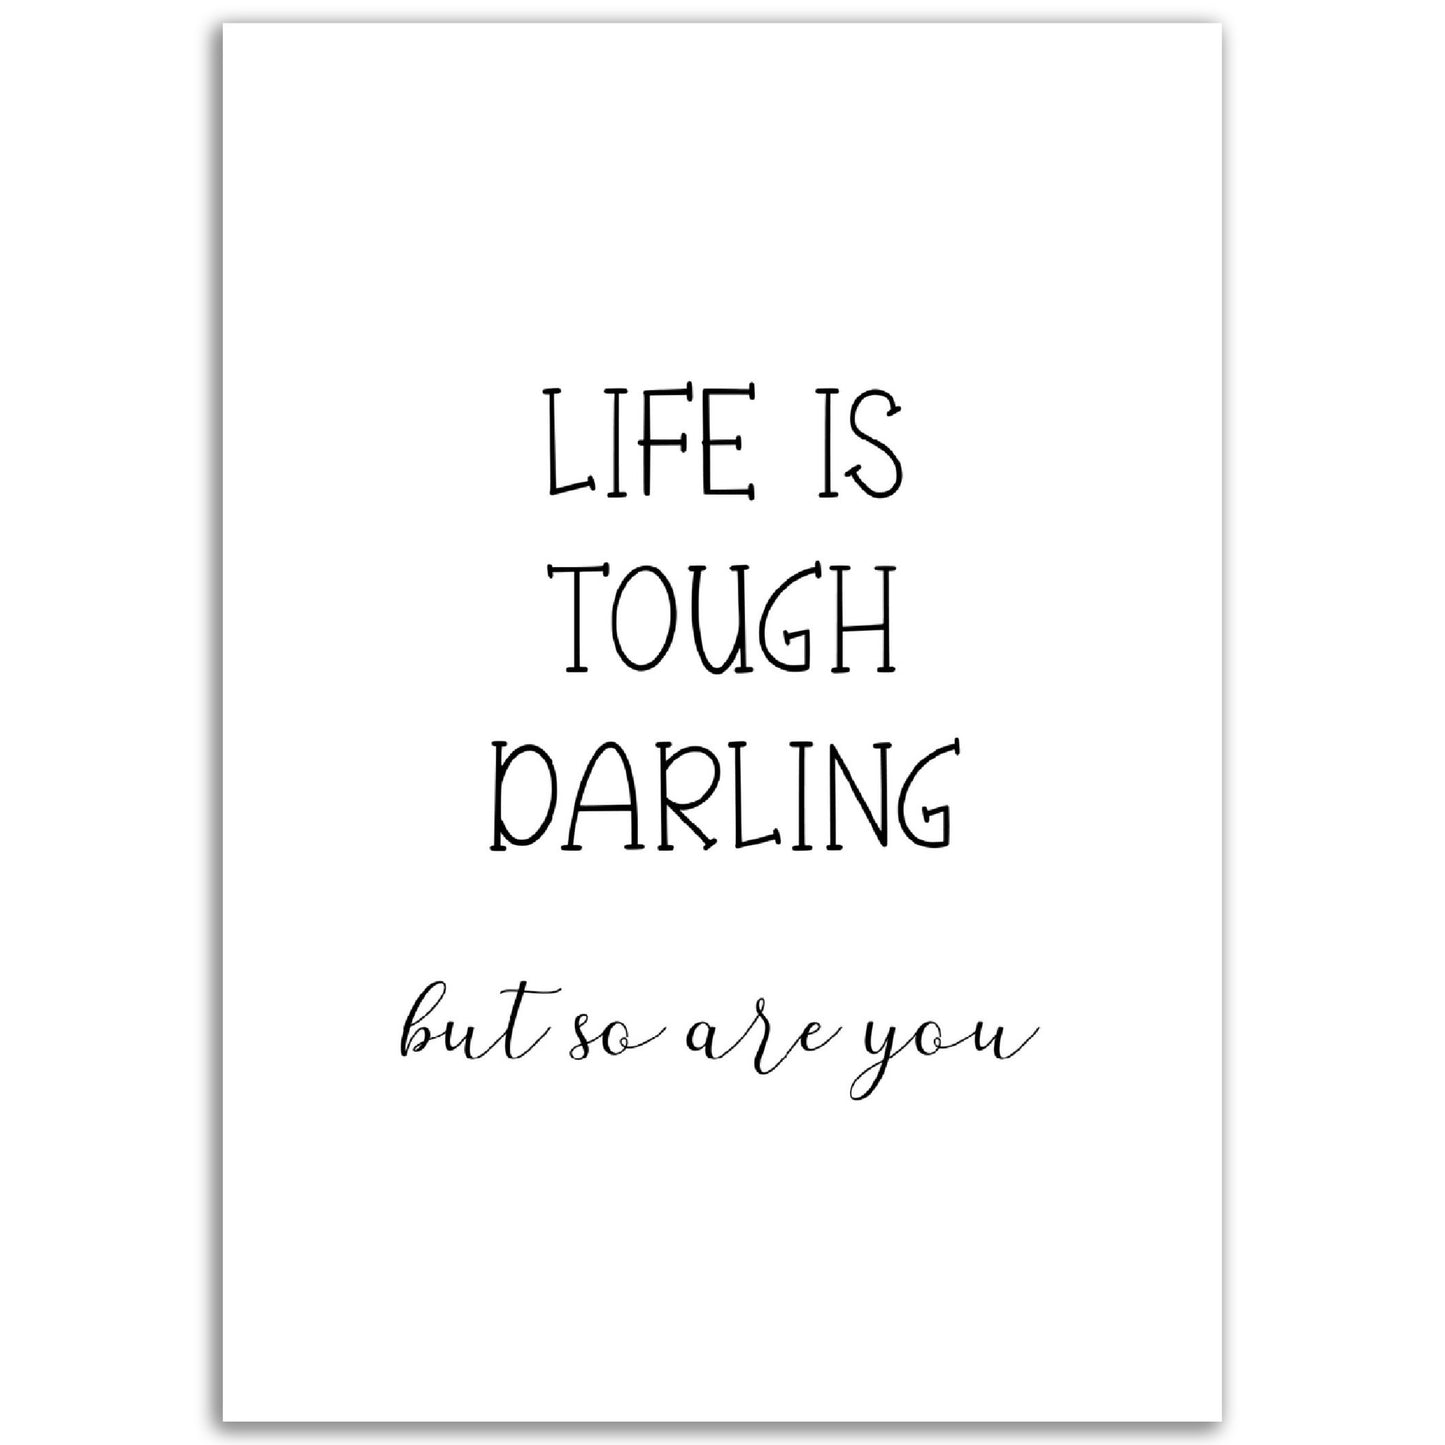 Life is Tough Darling Print